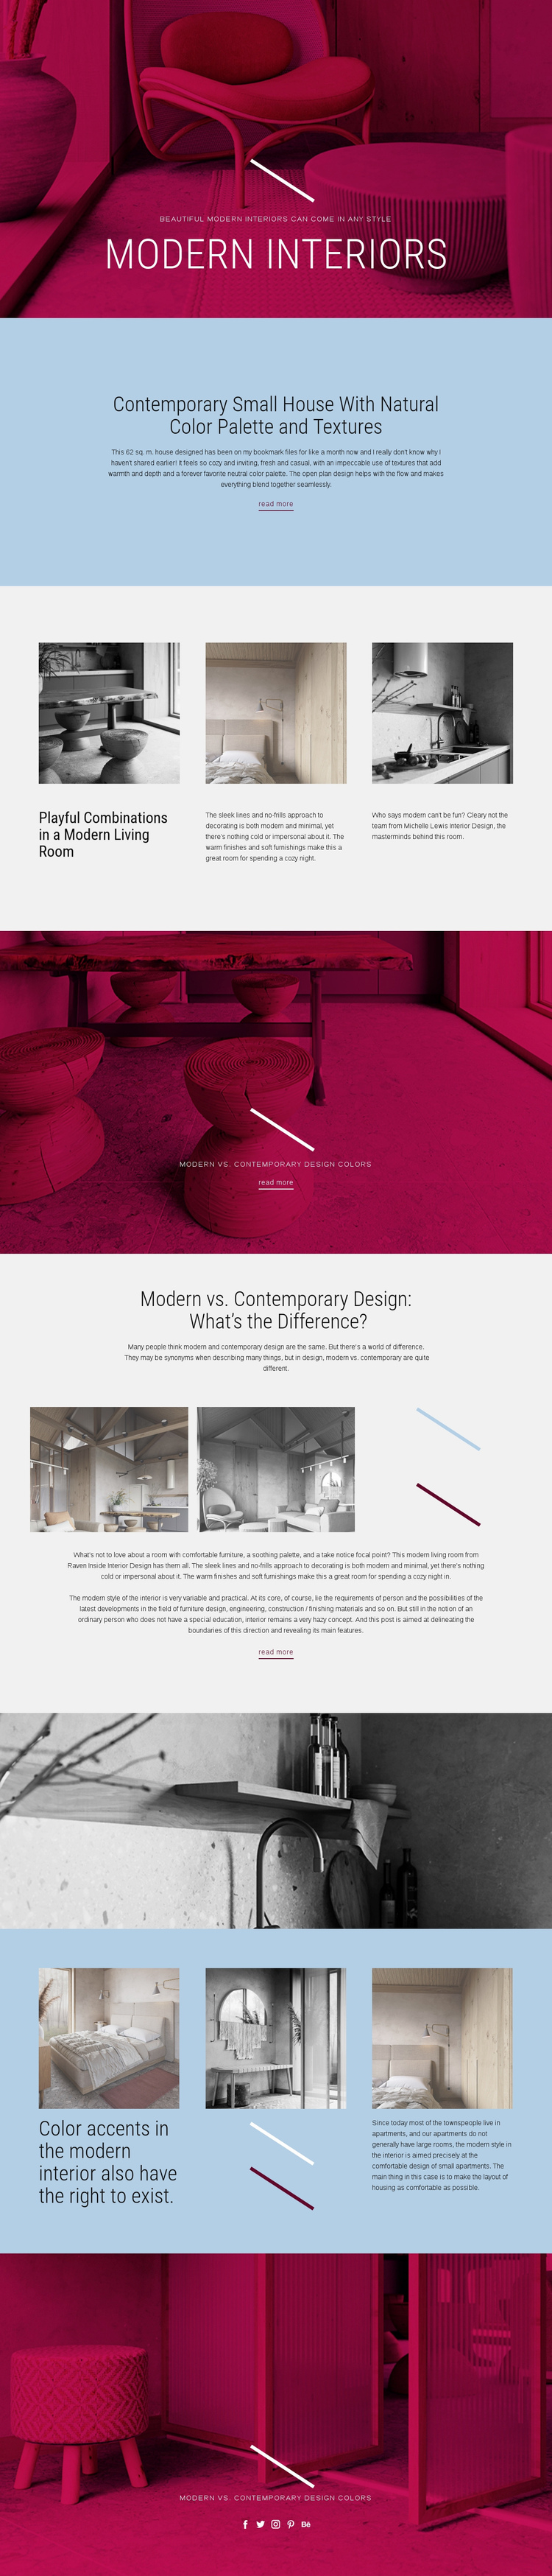 Art Nouveau furniture Website Builder Software